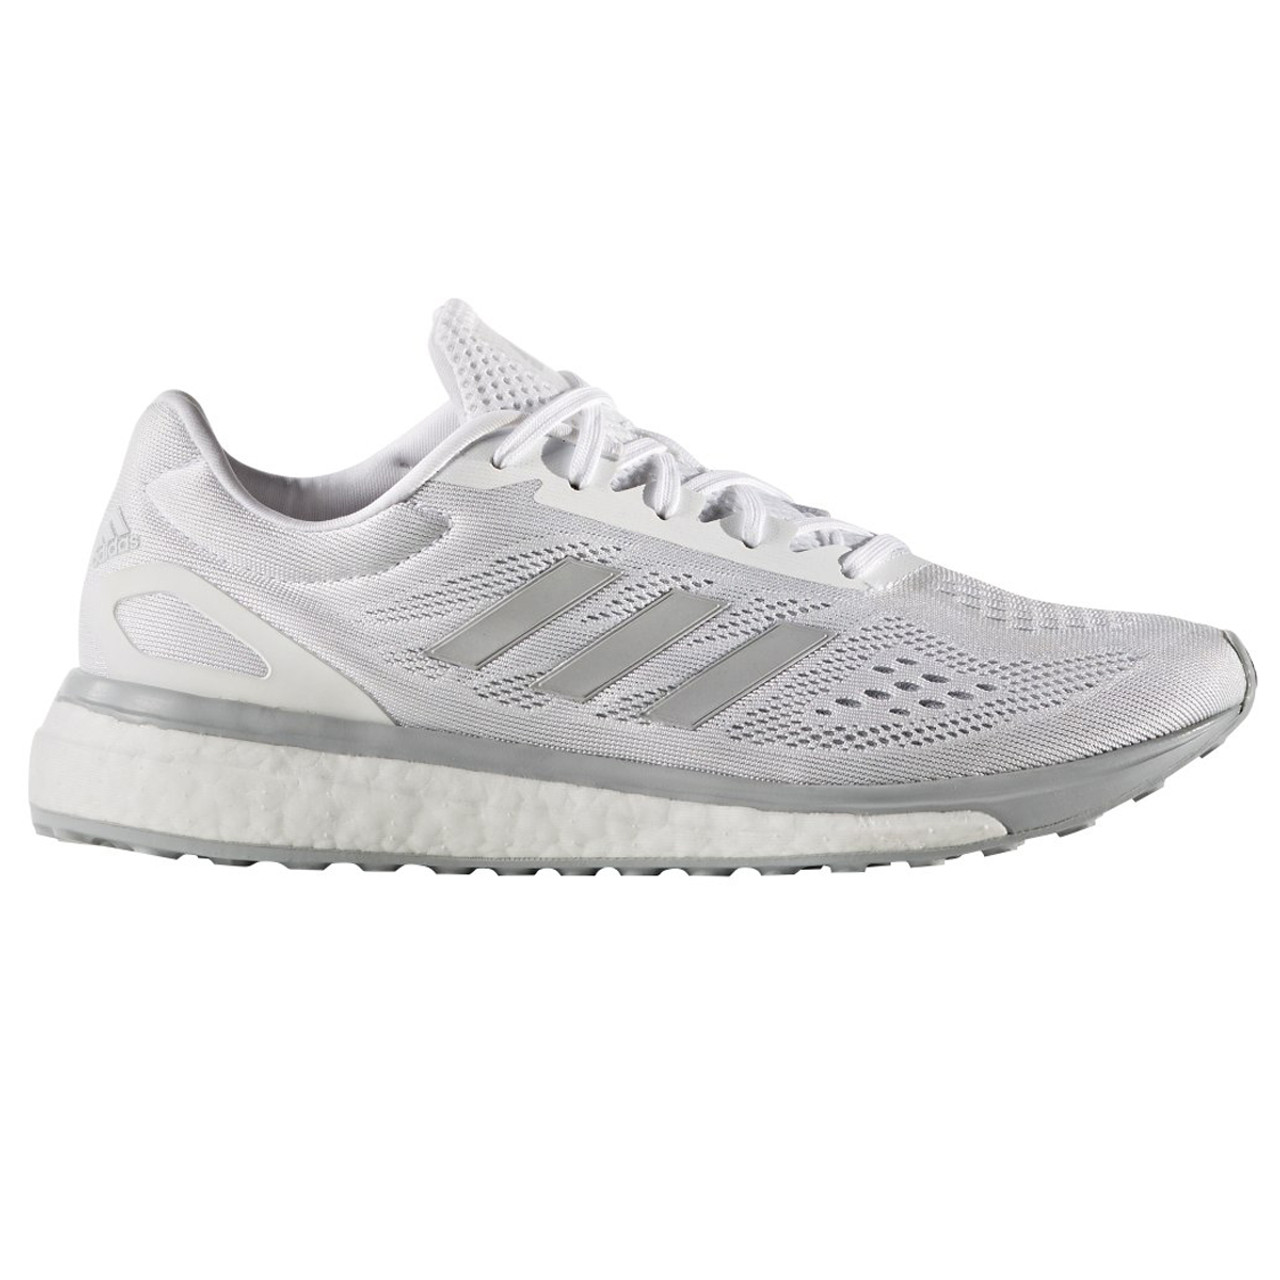 W BA7784 Women's Running Shoes - White/Silver/Clear Onix